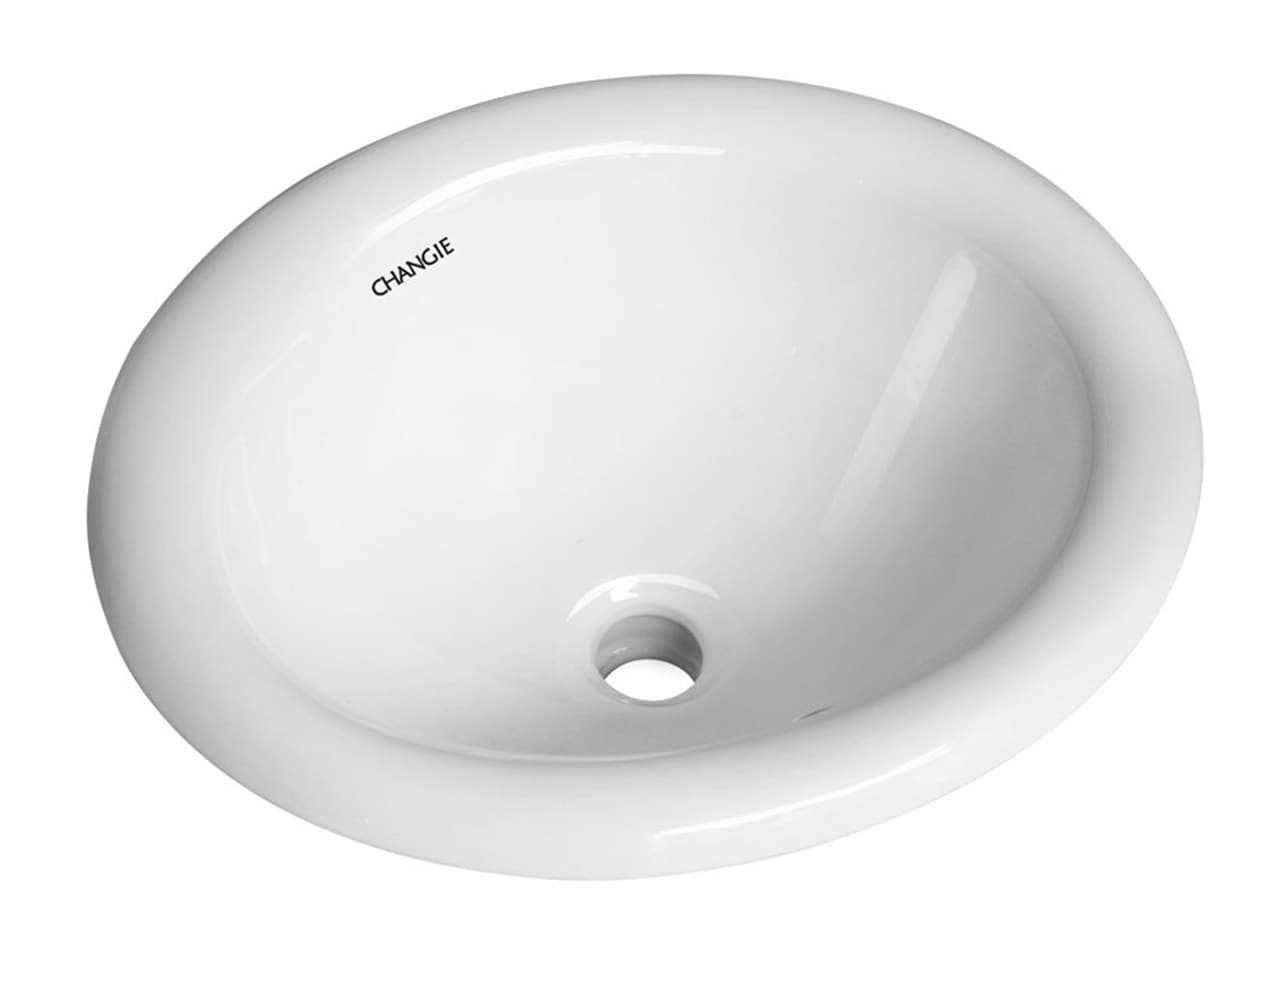 cunter drop sinks in bathroom oval